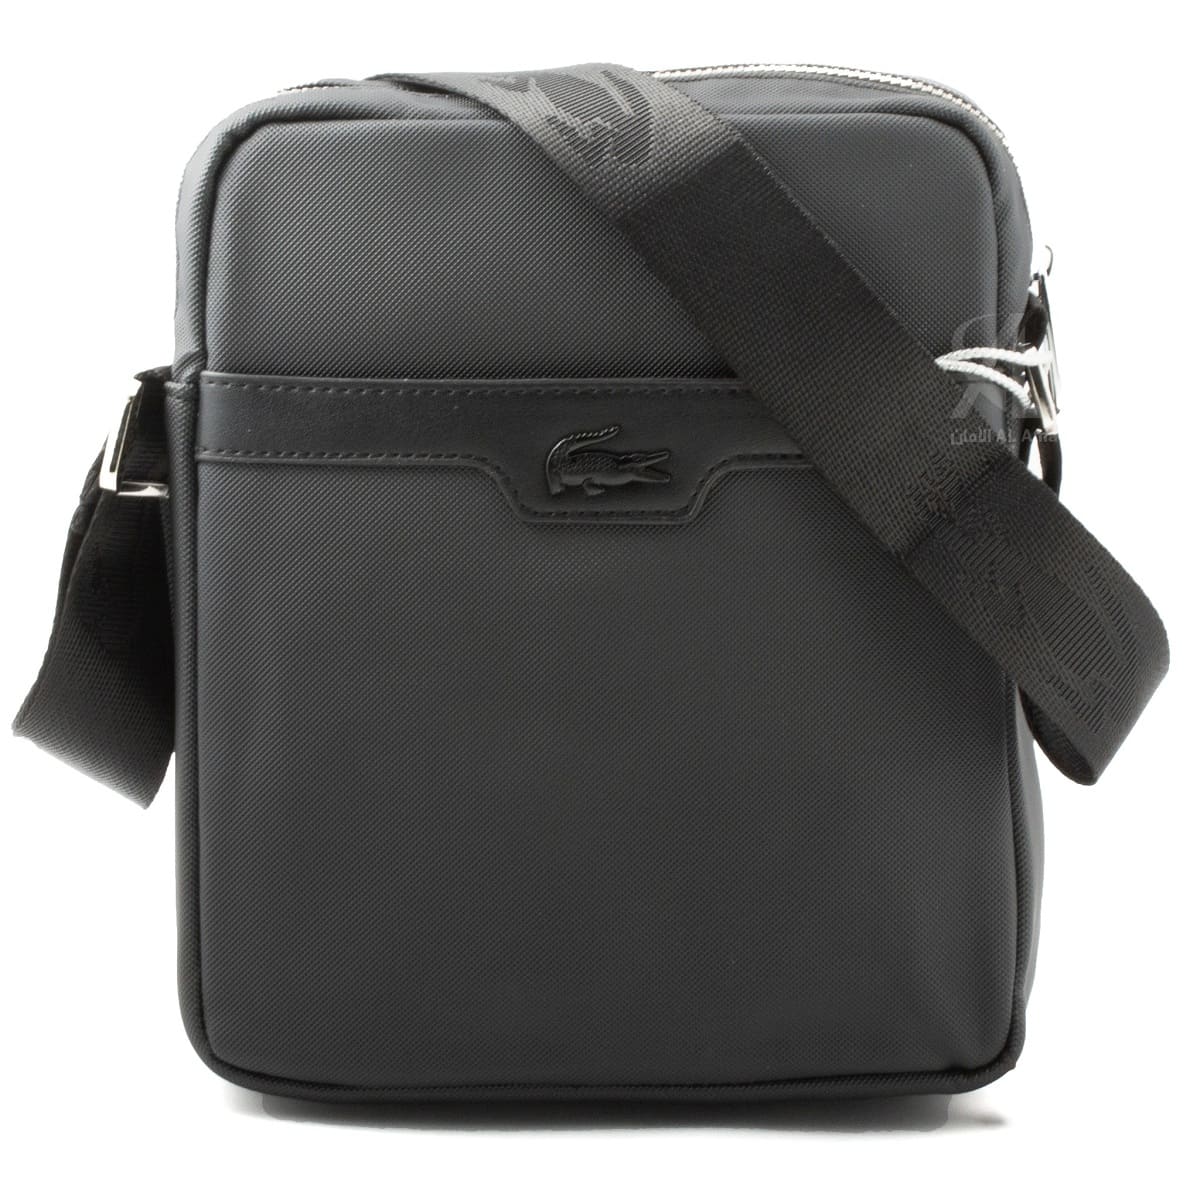 Lacoste-crossbag-with-hand-black-color-leather-for-men-messenger